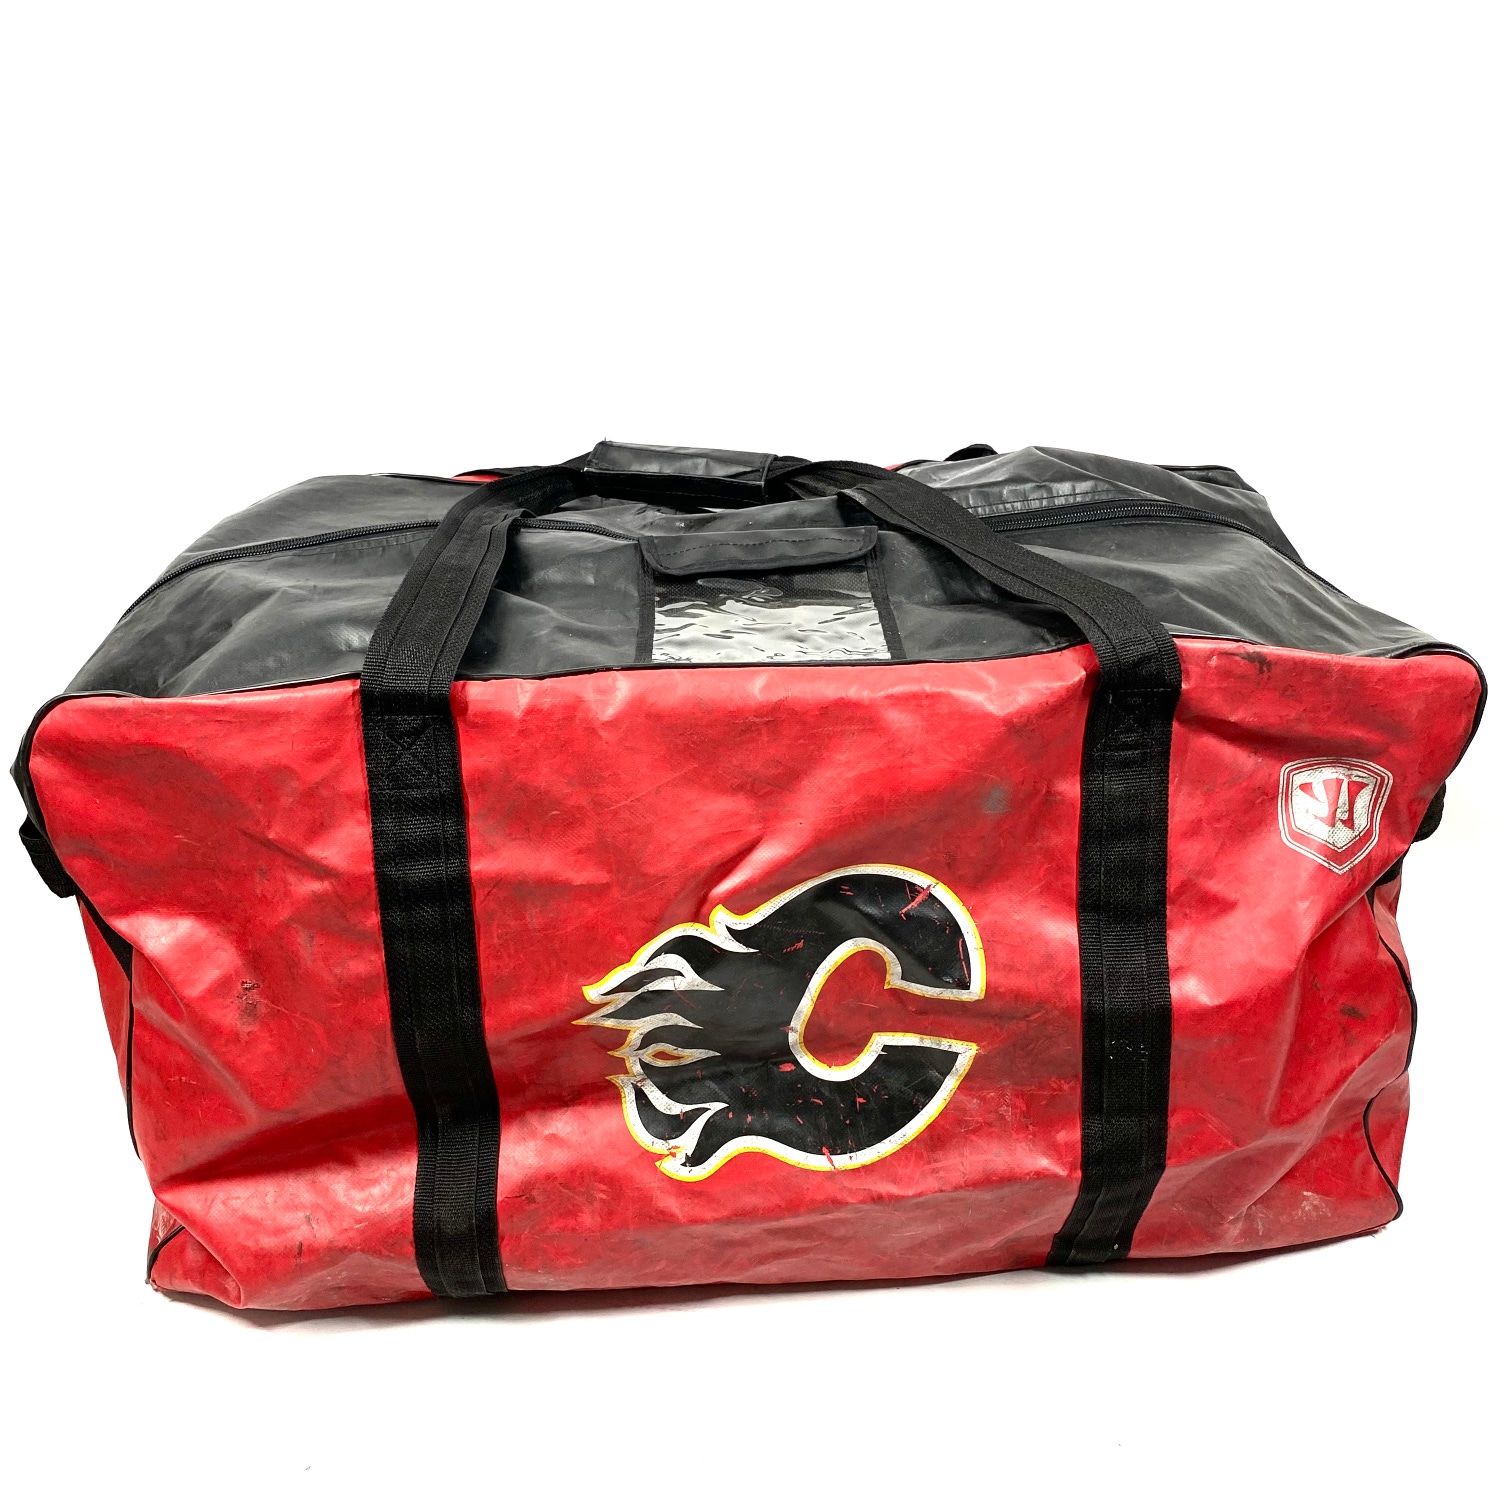 Used Warrior NHL Pro Stock Hockey Bag (Red)